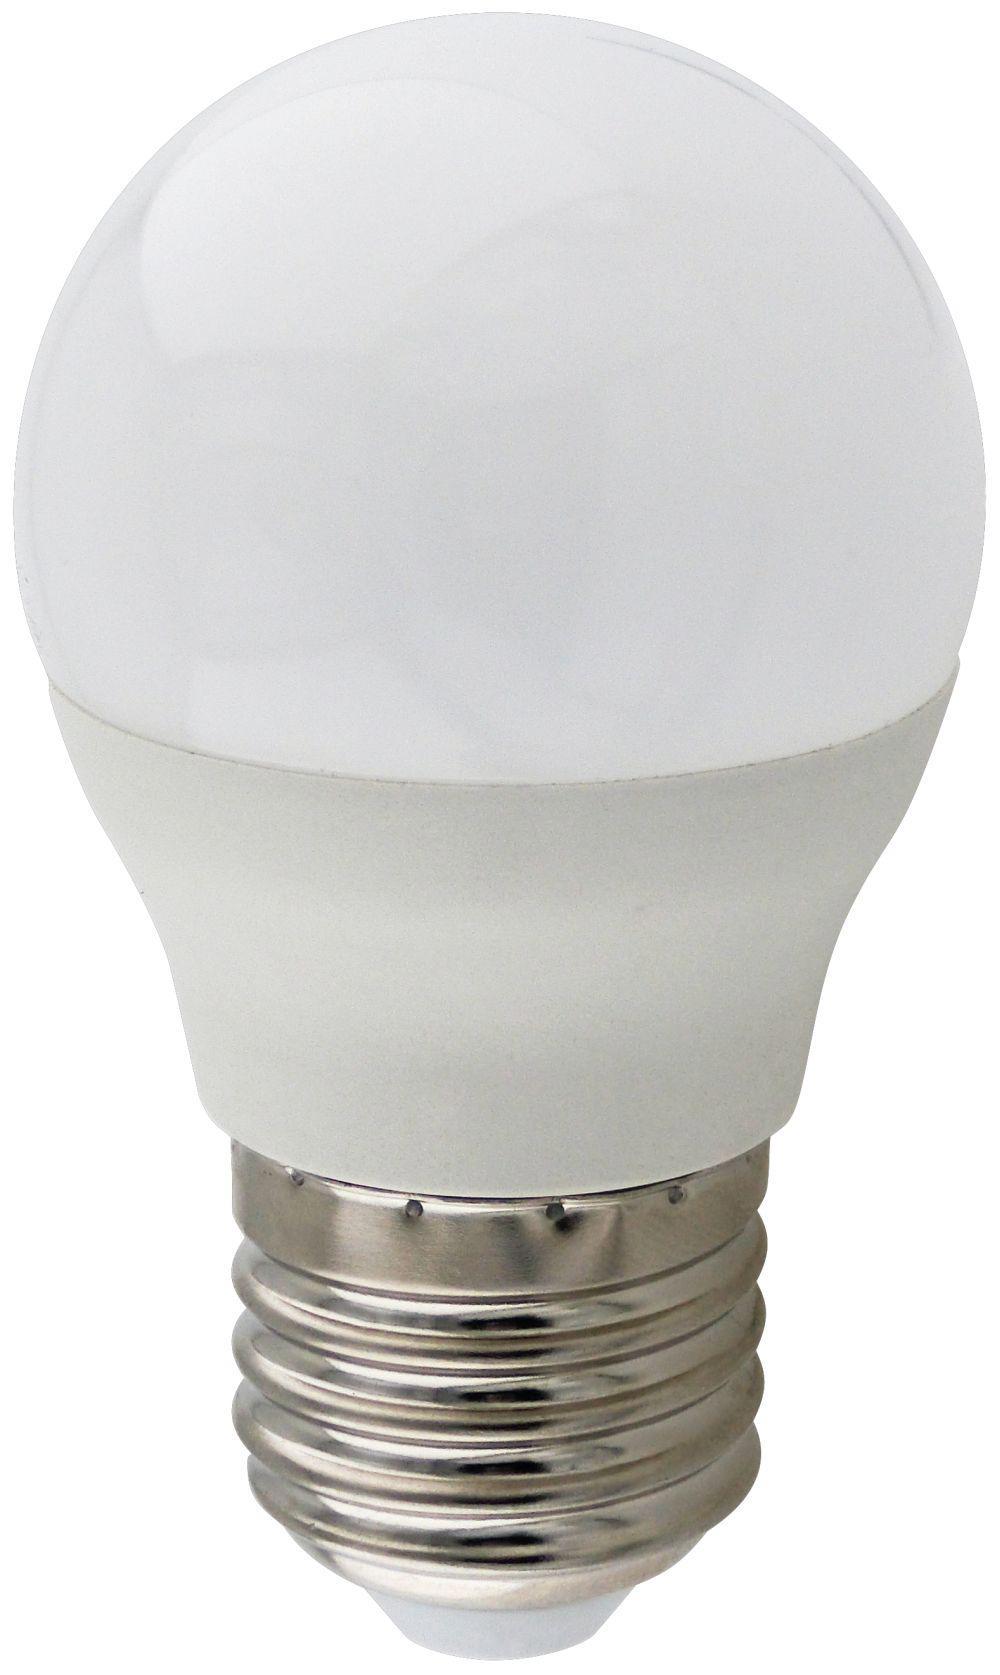 90121409 Лампа Premium светодионая E27 9 Вт шар 810 Лм теплый свет STLM-0112533 ECOLA